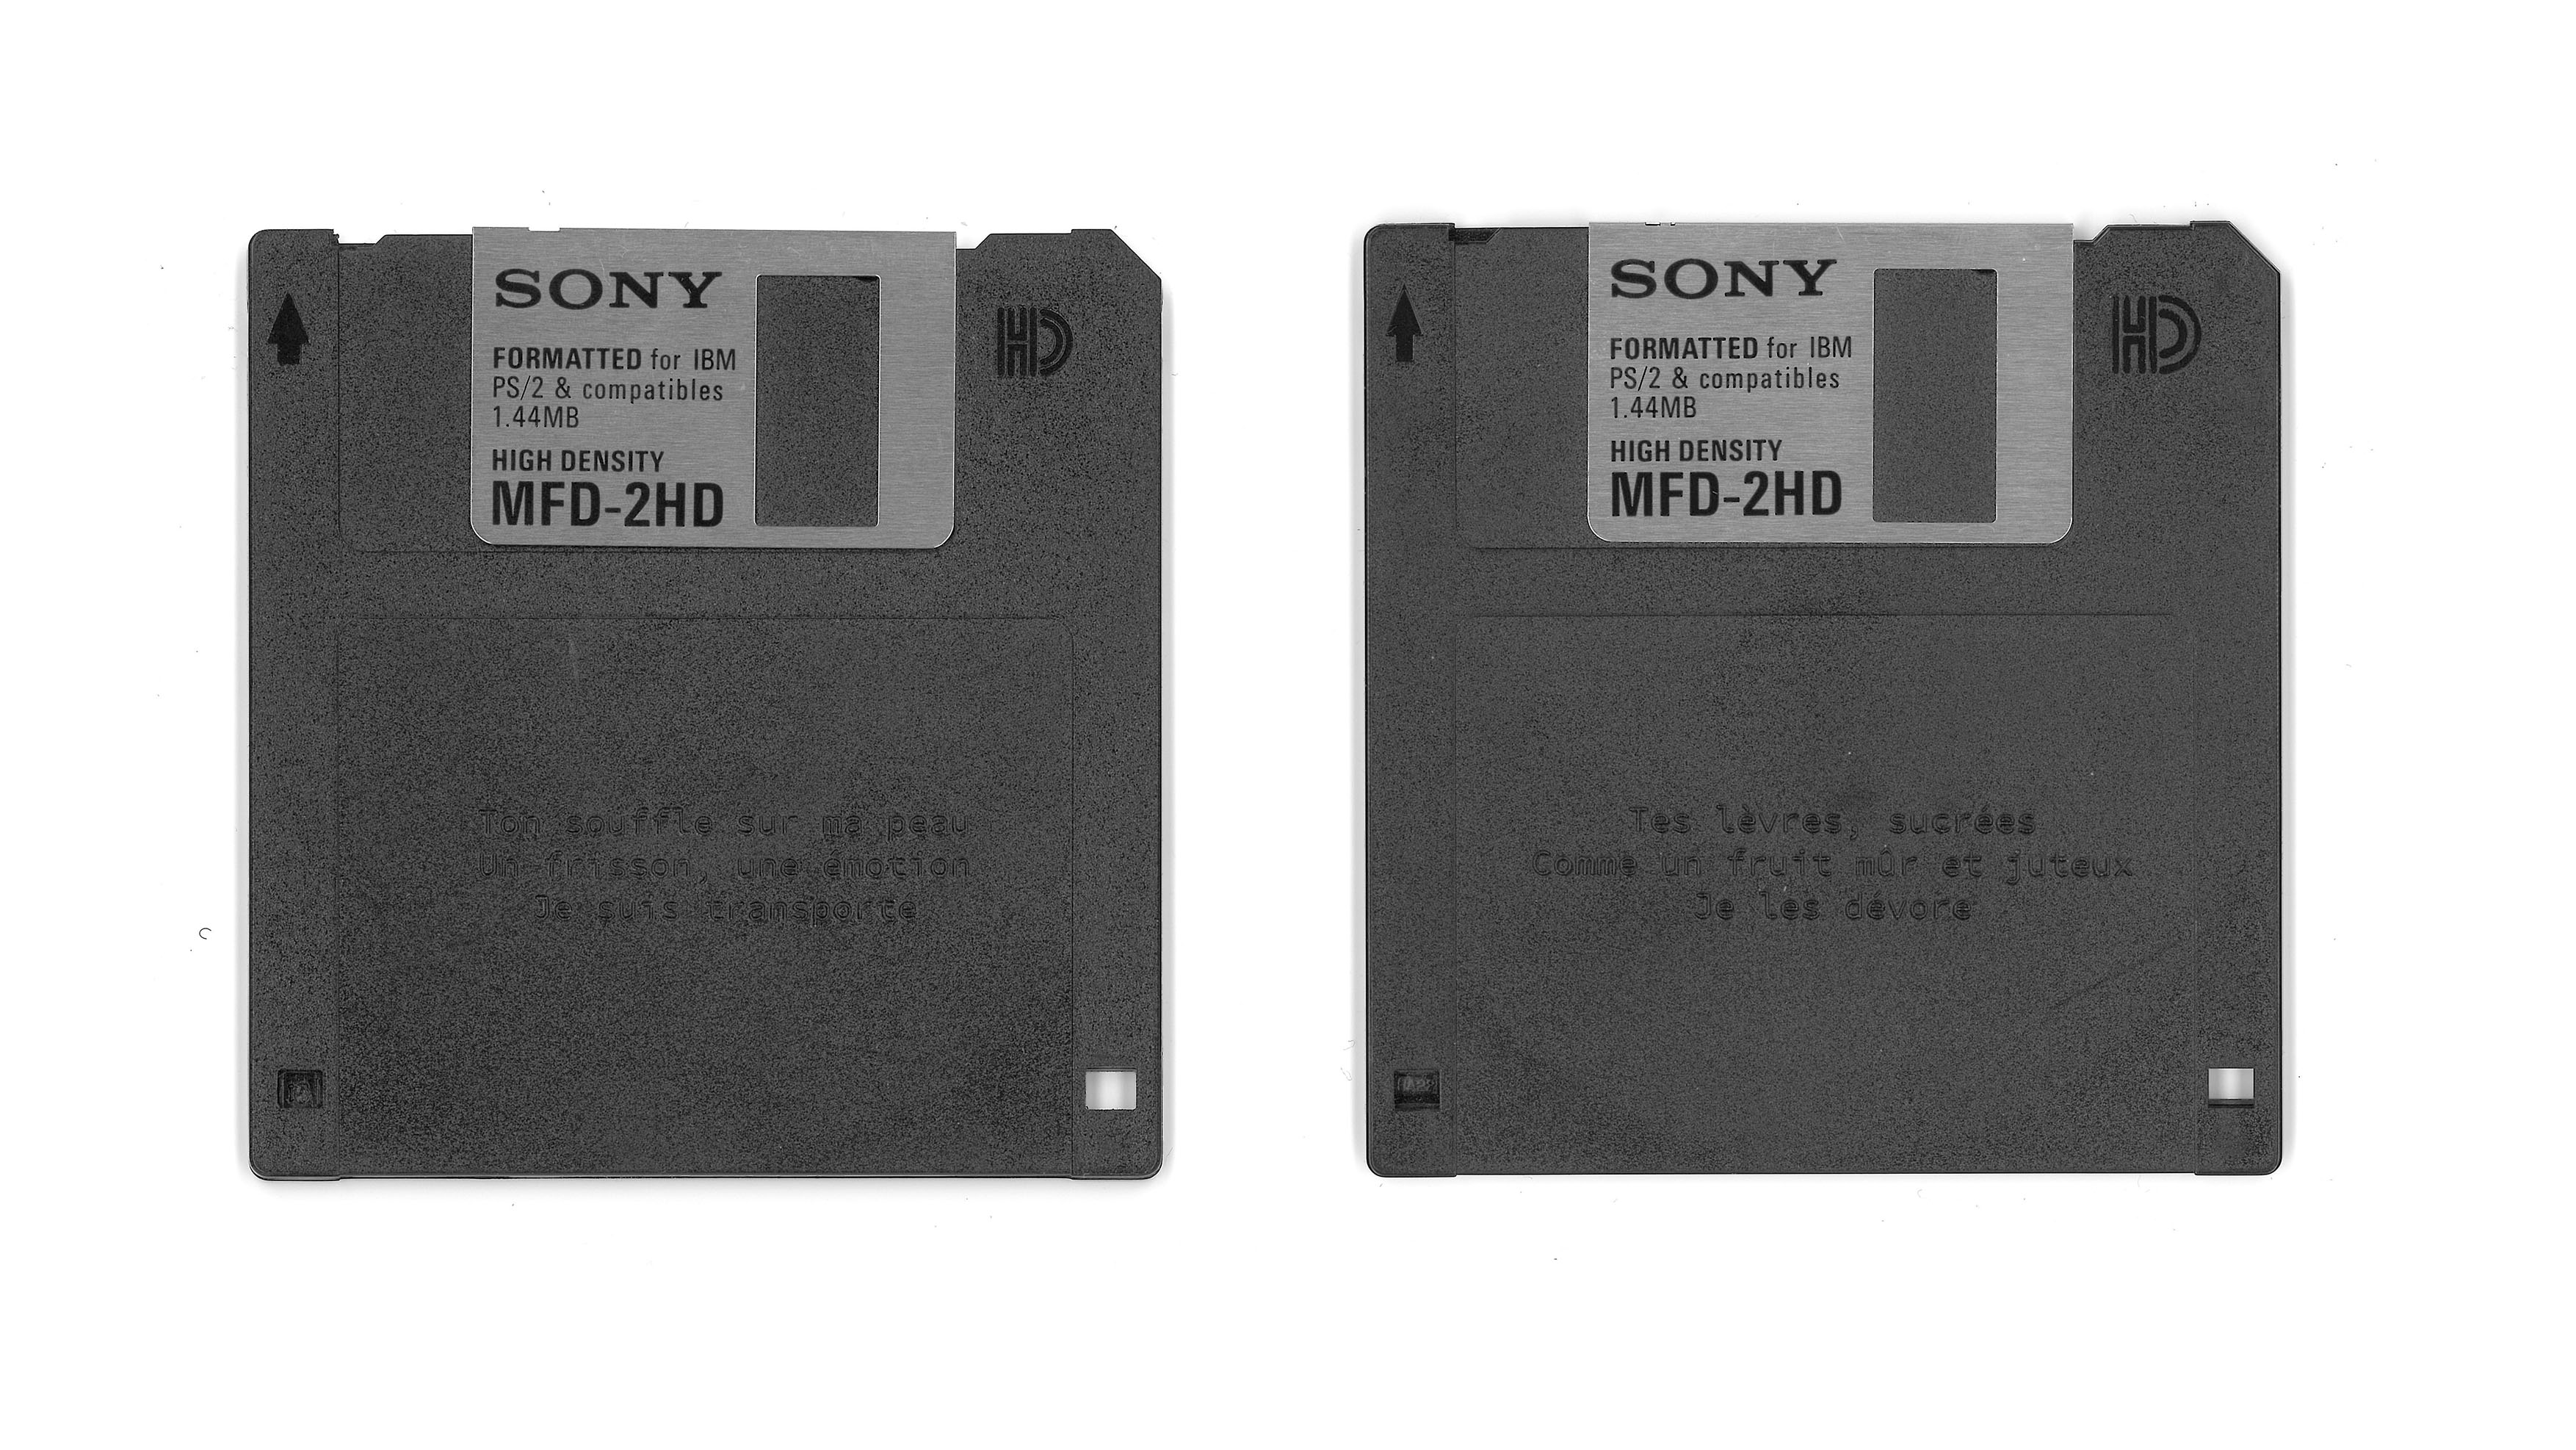 2 engraved floppy disks